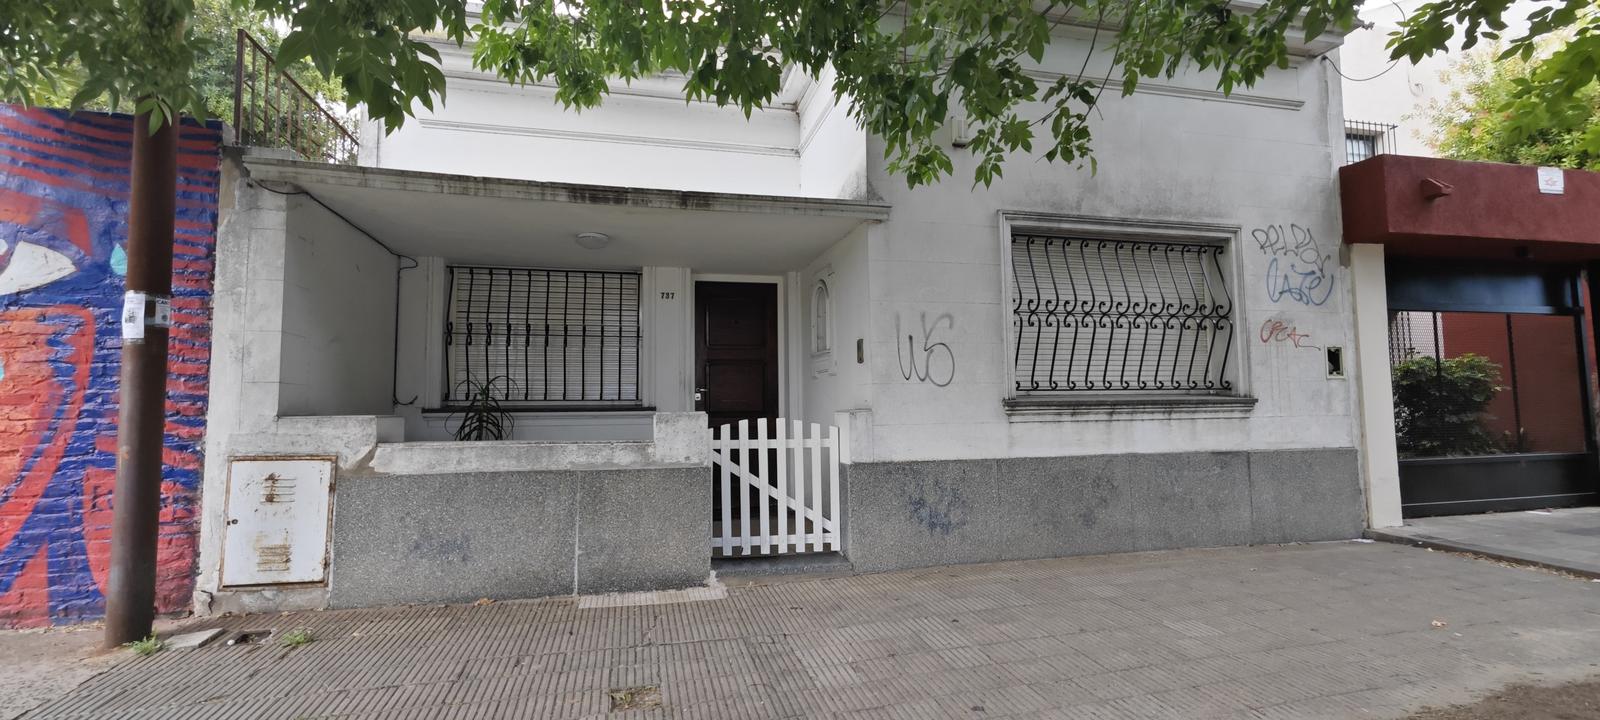 Venta casa a refaccionar - 7 e/ 524 y 525 - Tolosa, La Plata